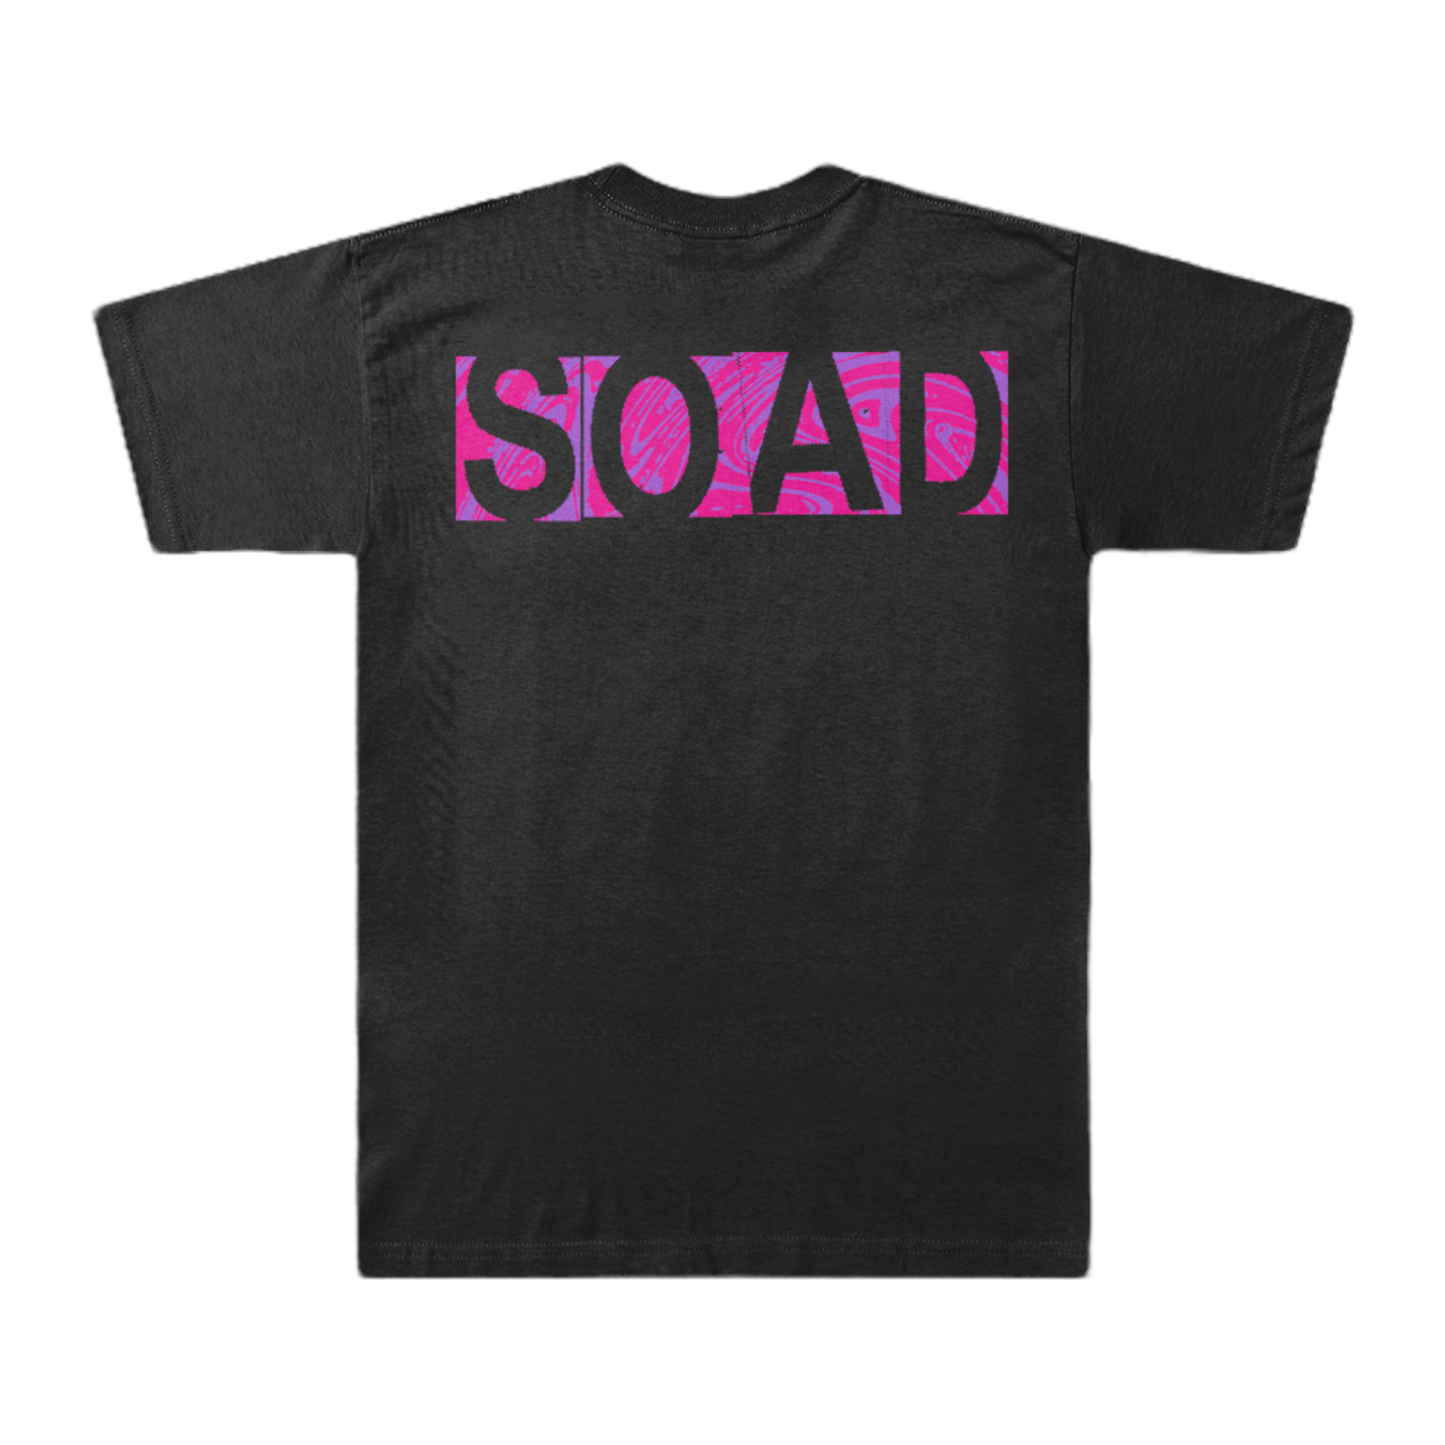 Self-Titled Neon Hand T-Shirt